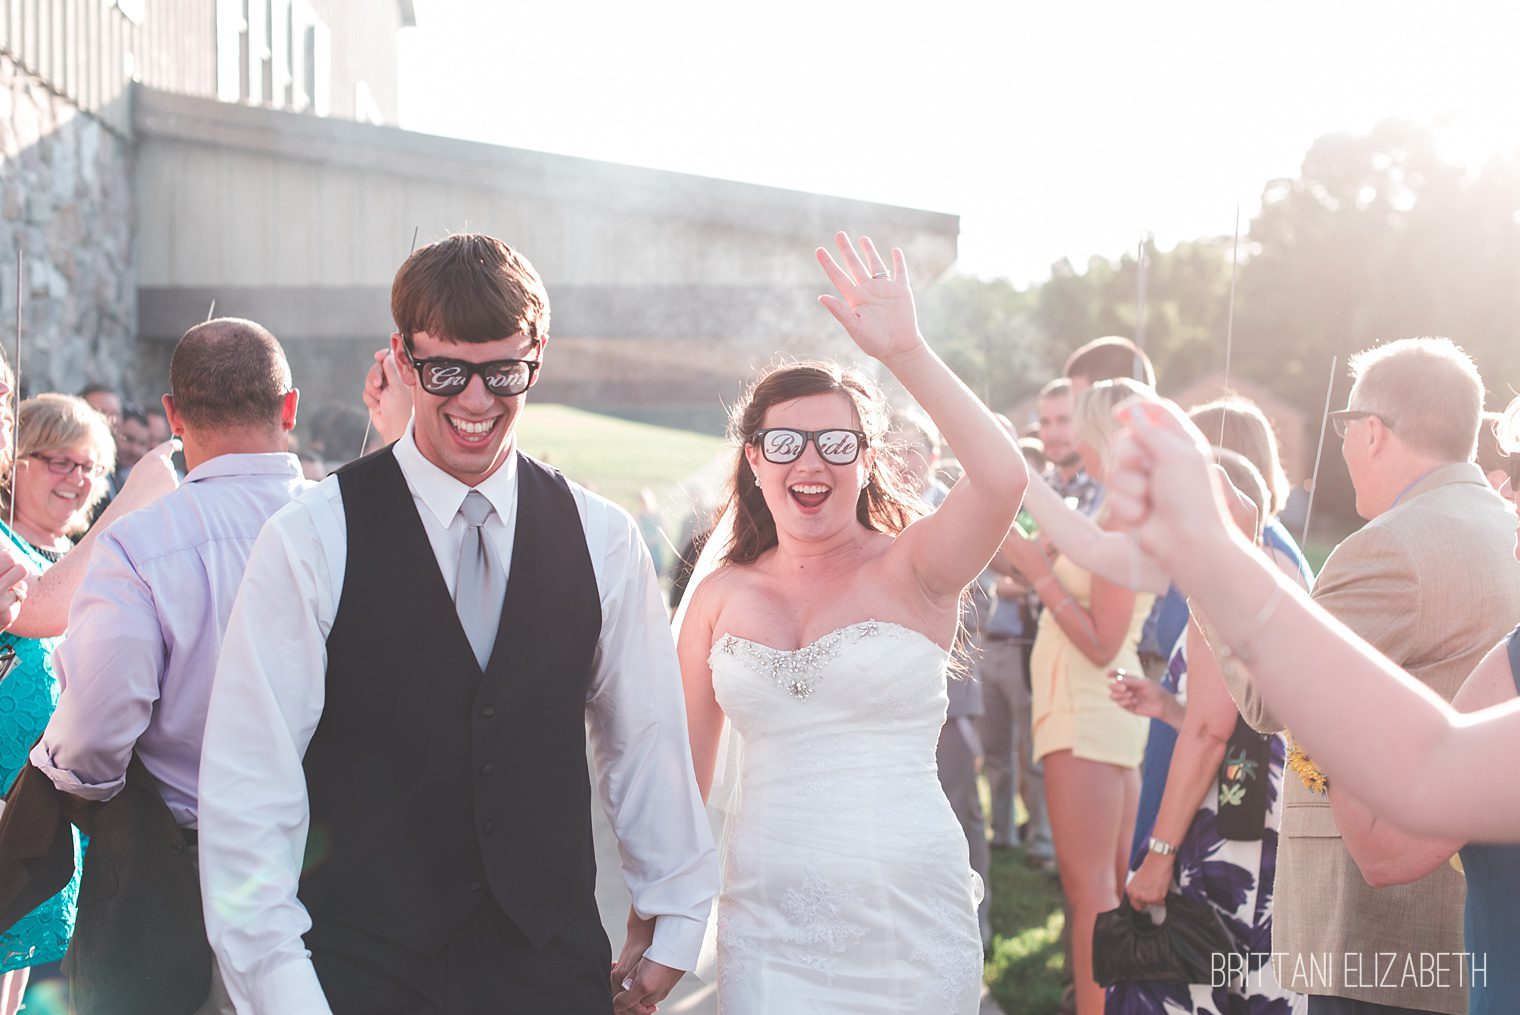 sparkler send off bride and groom sunglasses lodge at gettysburg